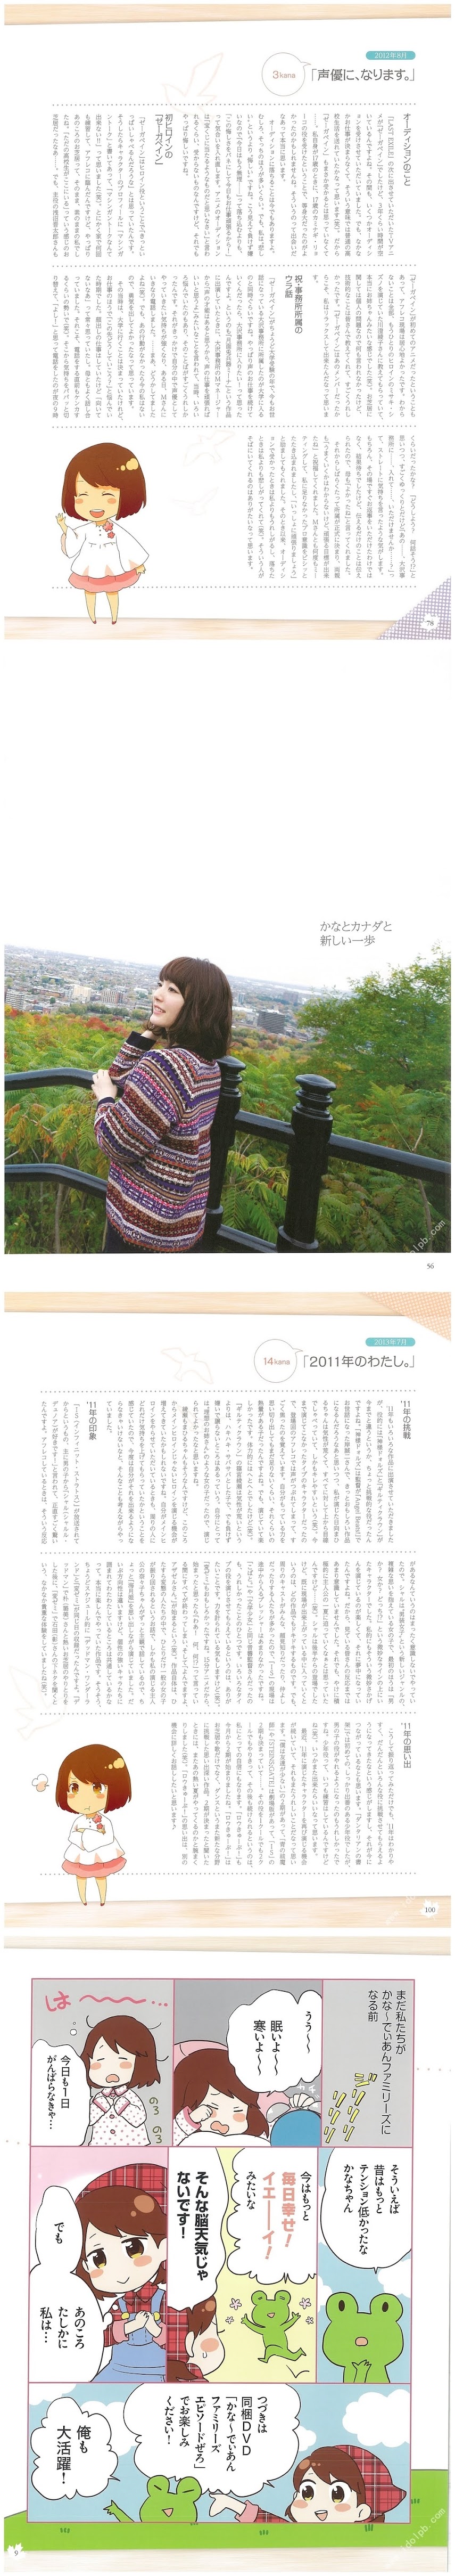 [PB] 2015.07.10 かながたり。 かなばかり。 花澤香菜   REP187 - Girlsdelta